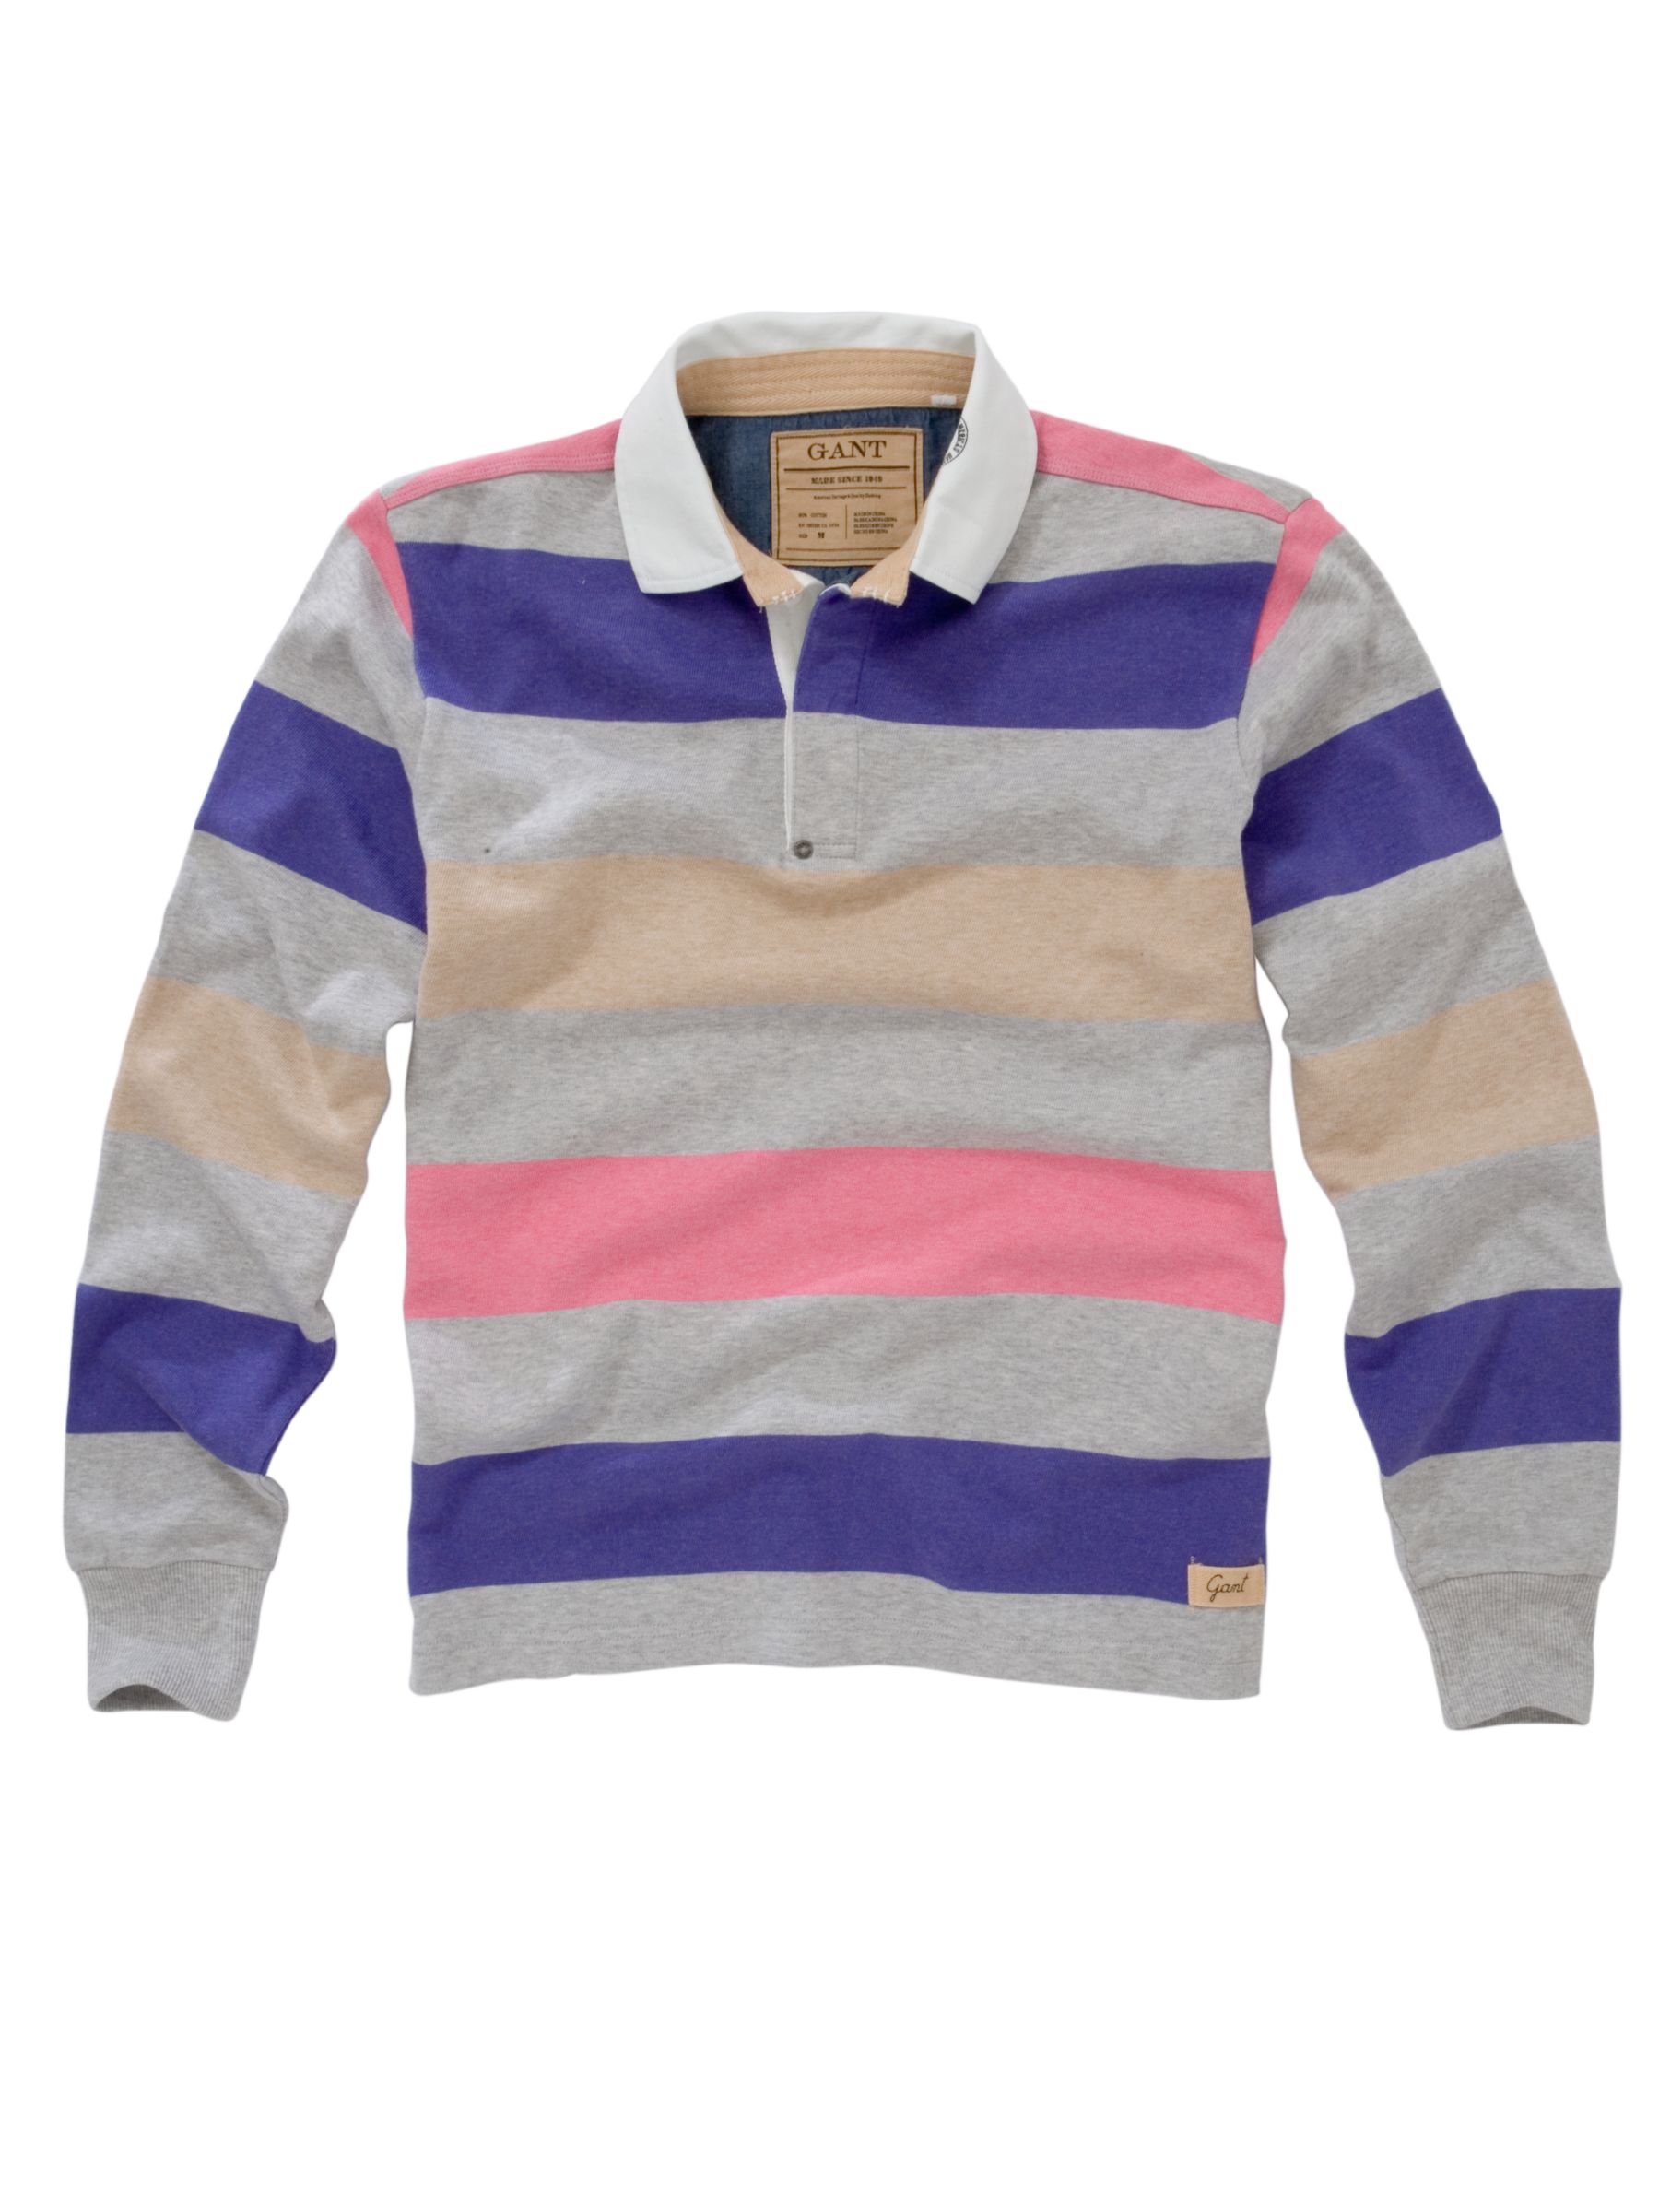 Gant 4-Colour Bar Stripe Rugby Shirt, Grey/purple